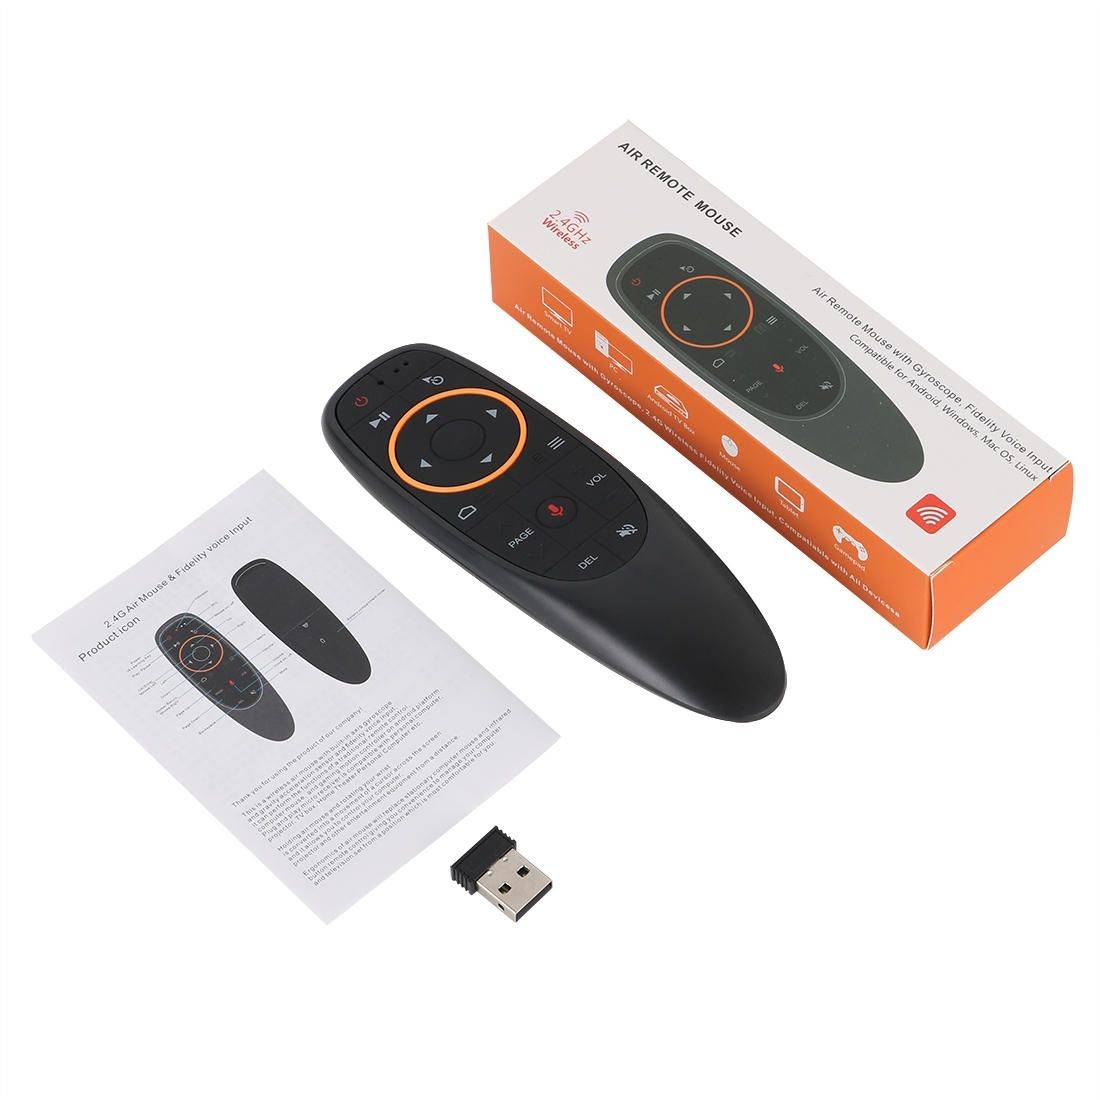 DroiX G10B Air Mouse Control remoto Bluetooth para Android Box; Bluetooth 5.0 alcance de hasta 10 metros DX-G10B 